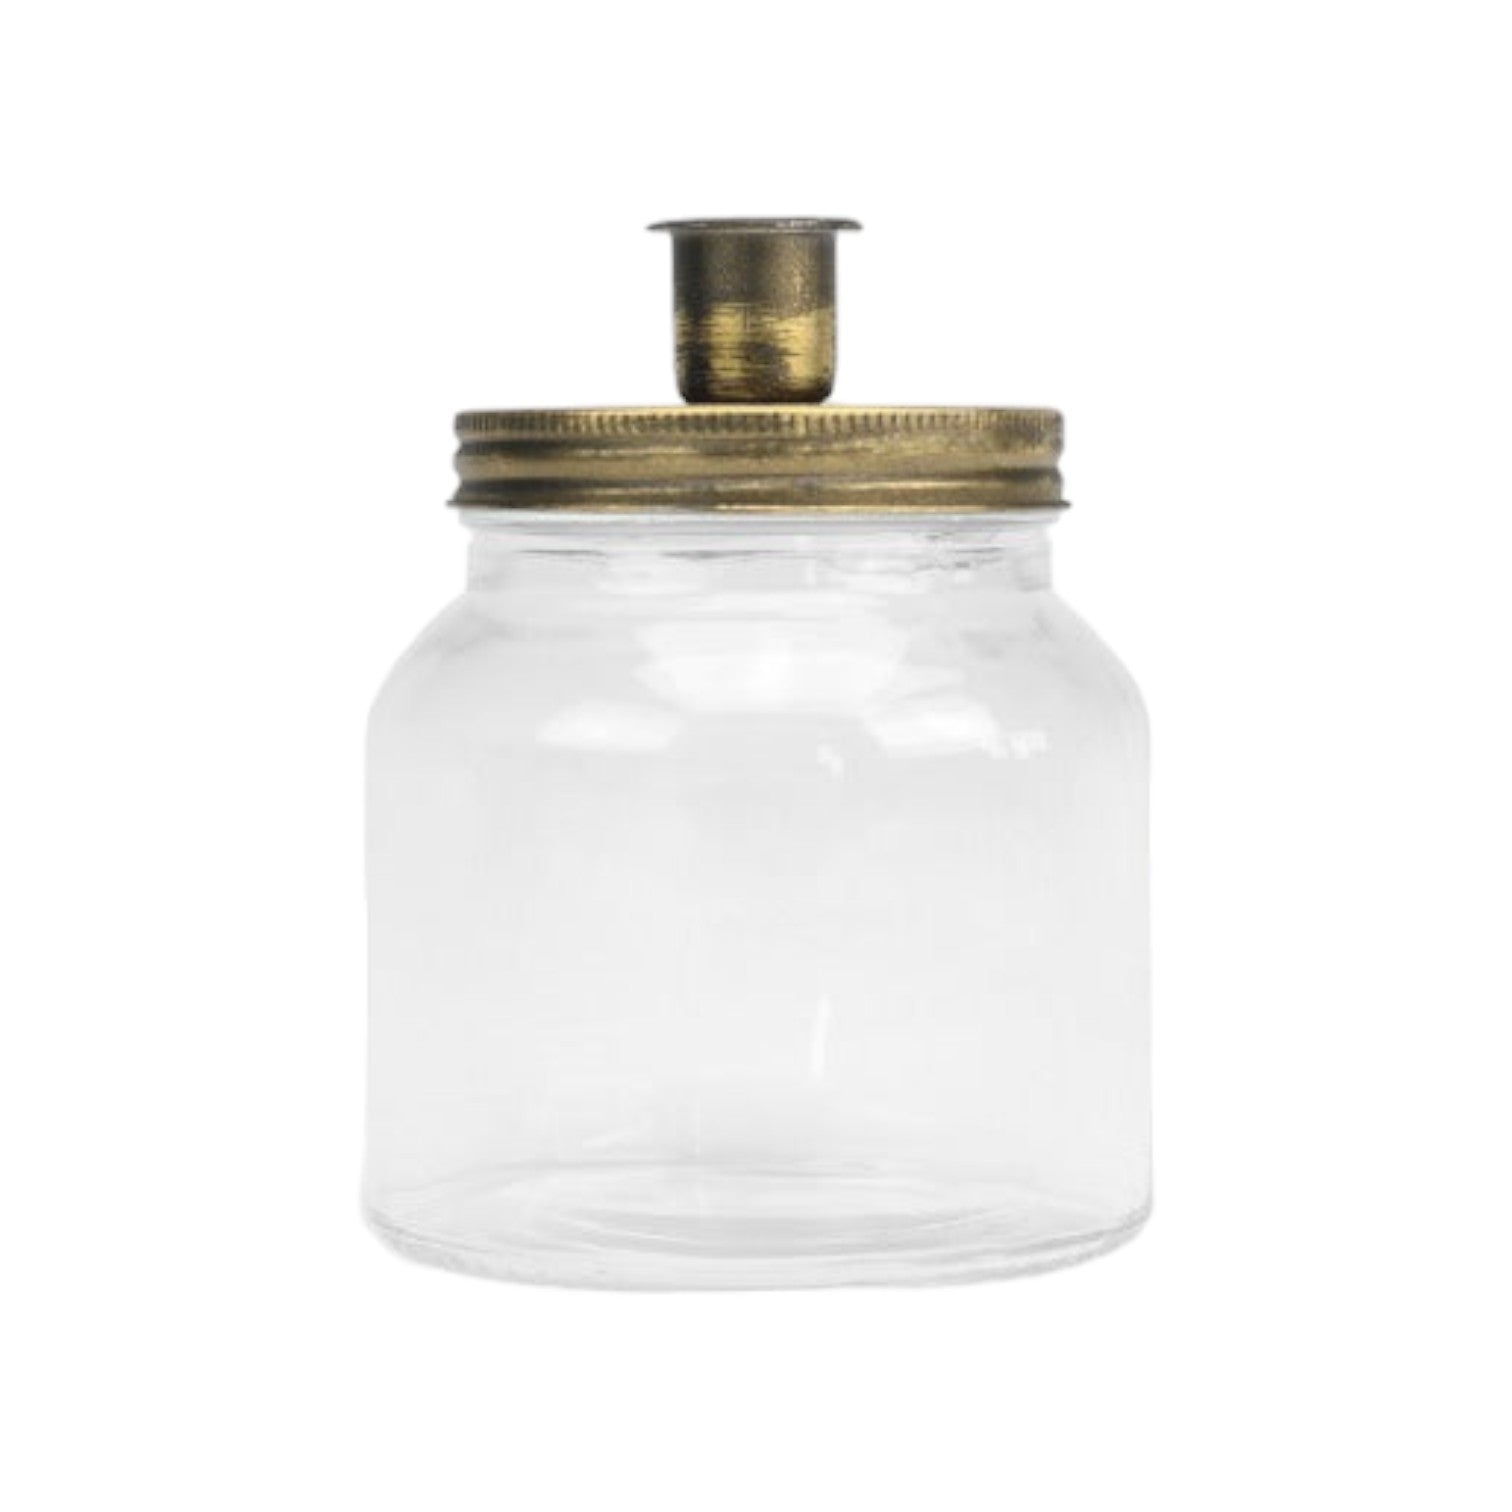 Maison d'Abri - Mason jar met kaarsenhouder 'Bari' (11cm hoog